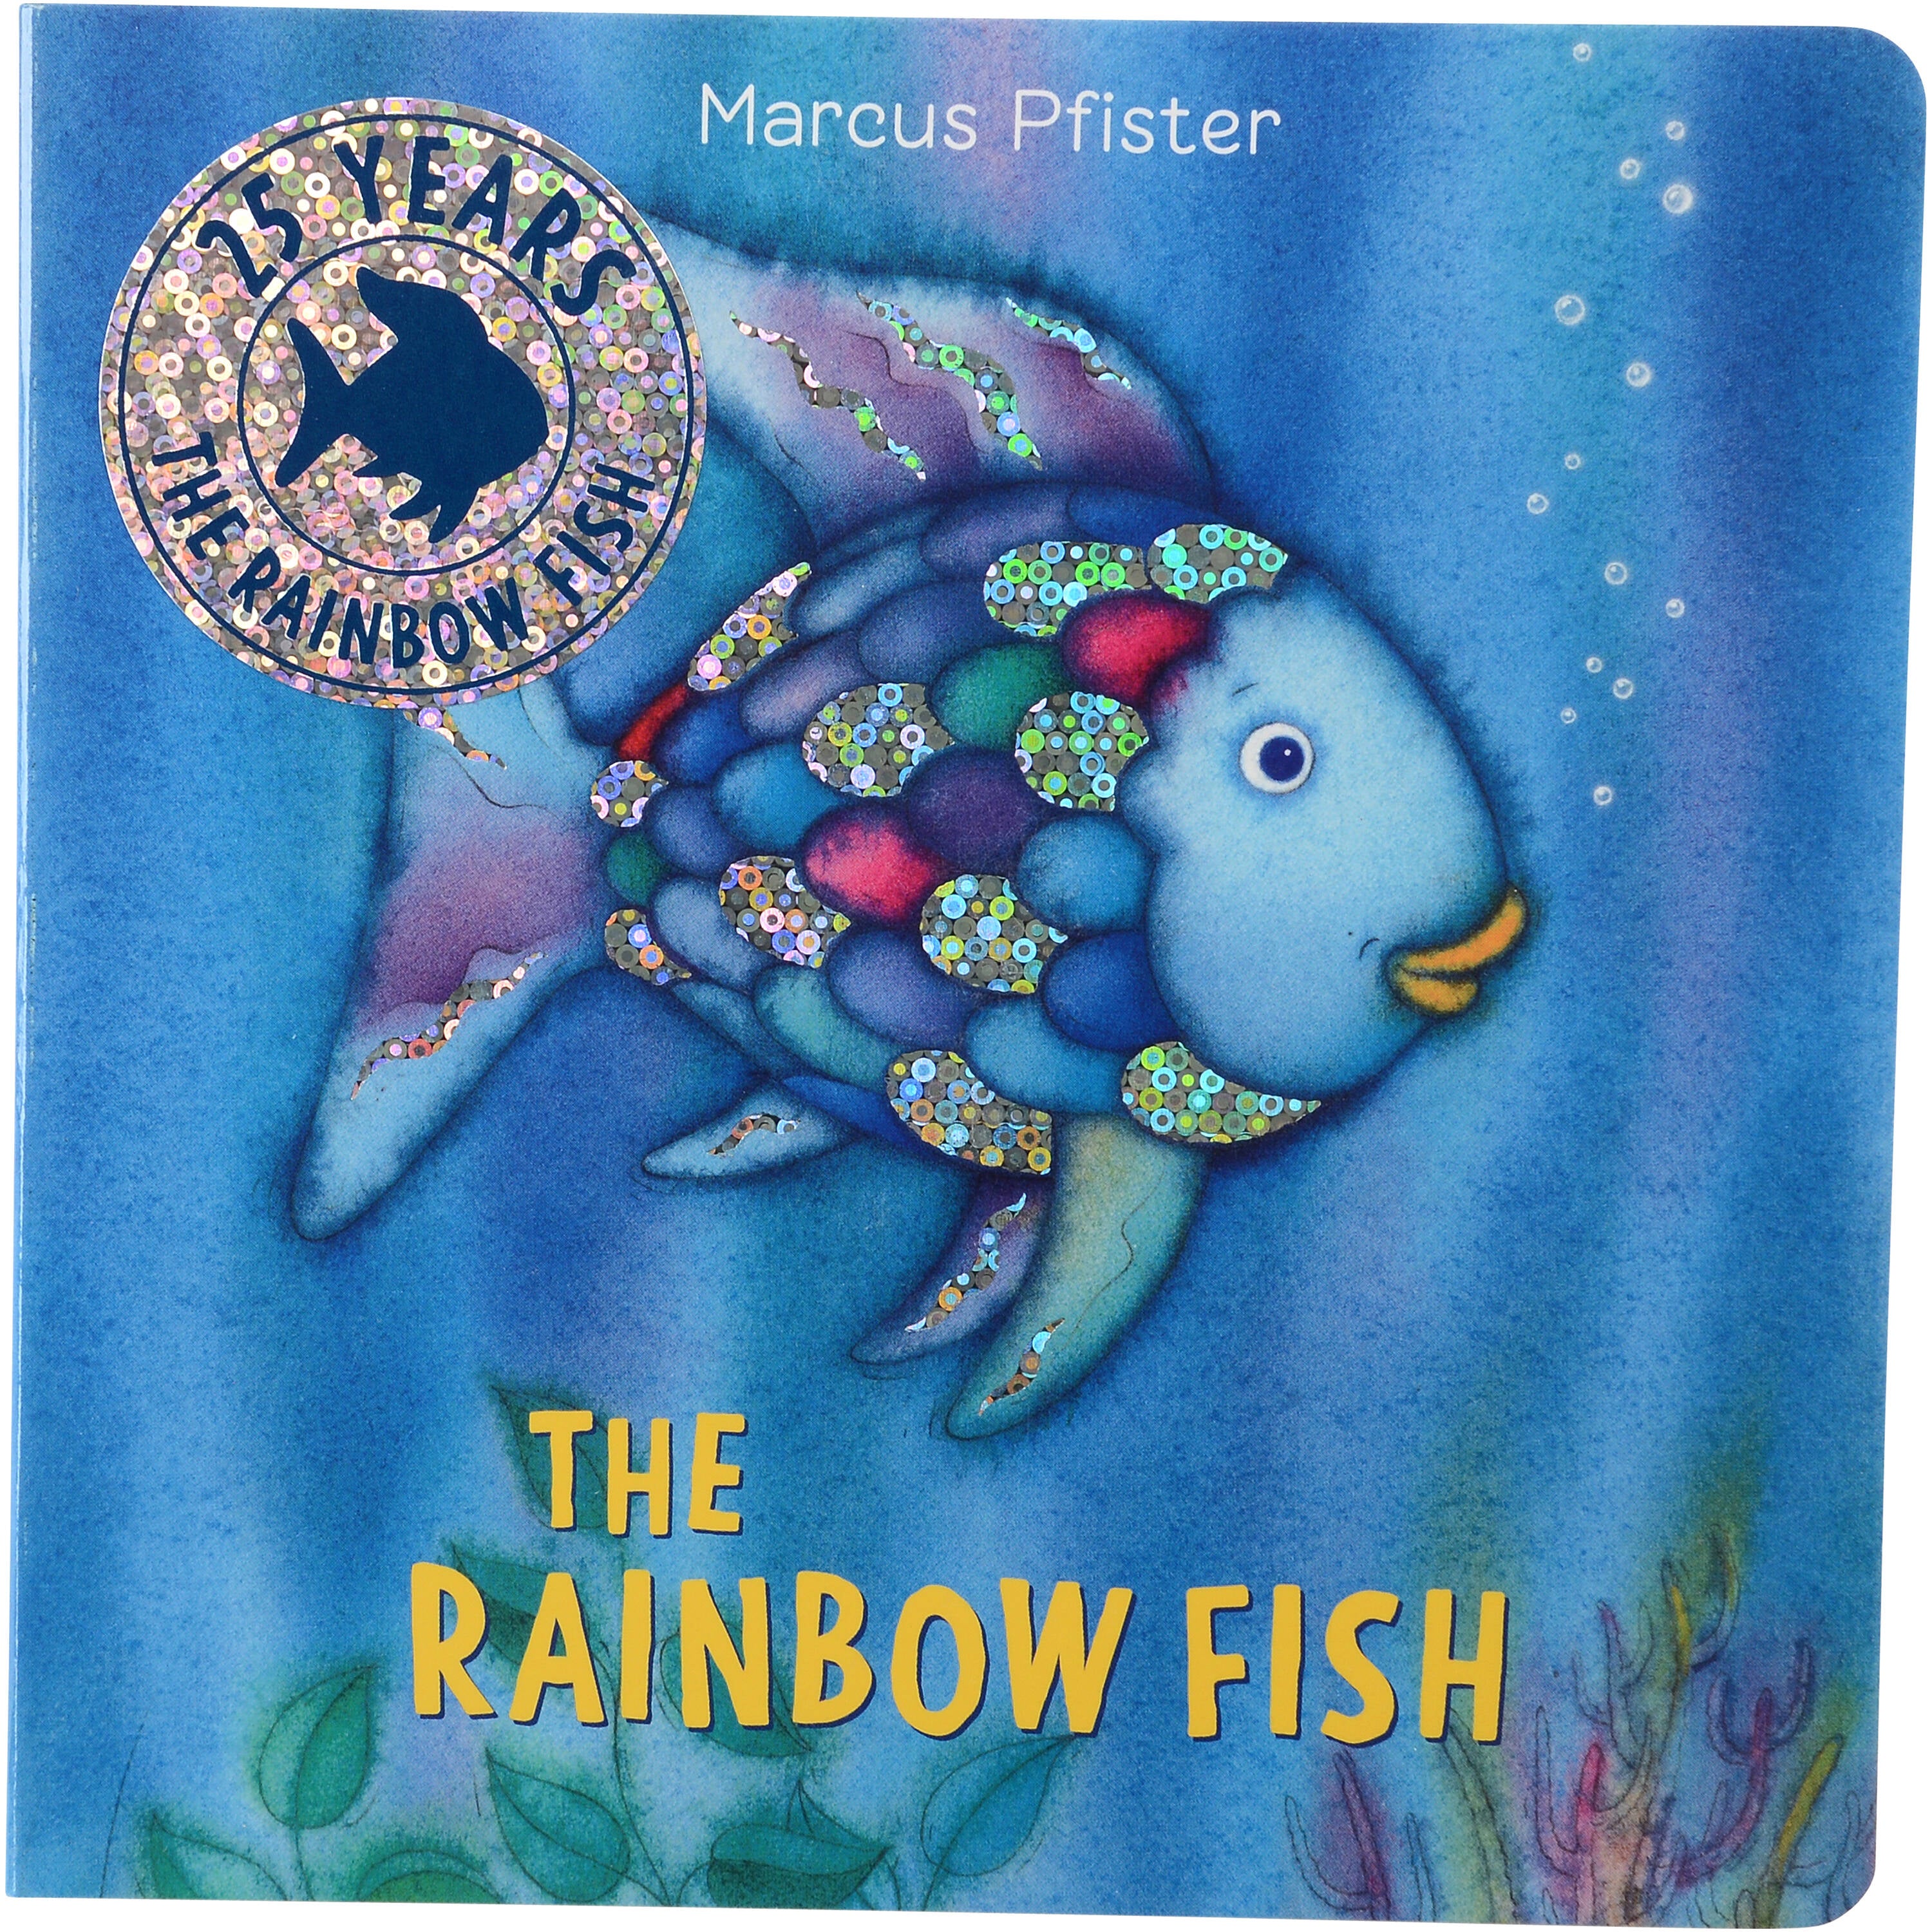 Board Book Classic "The Rainbow Fish"